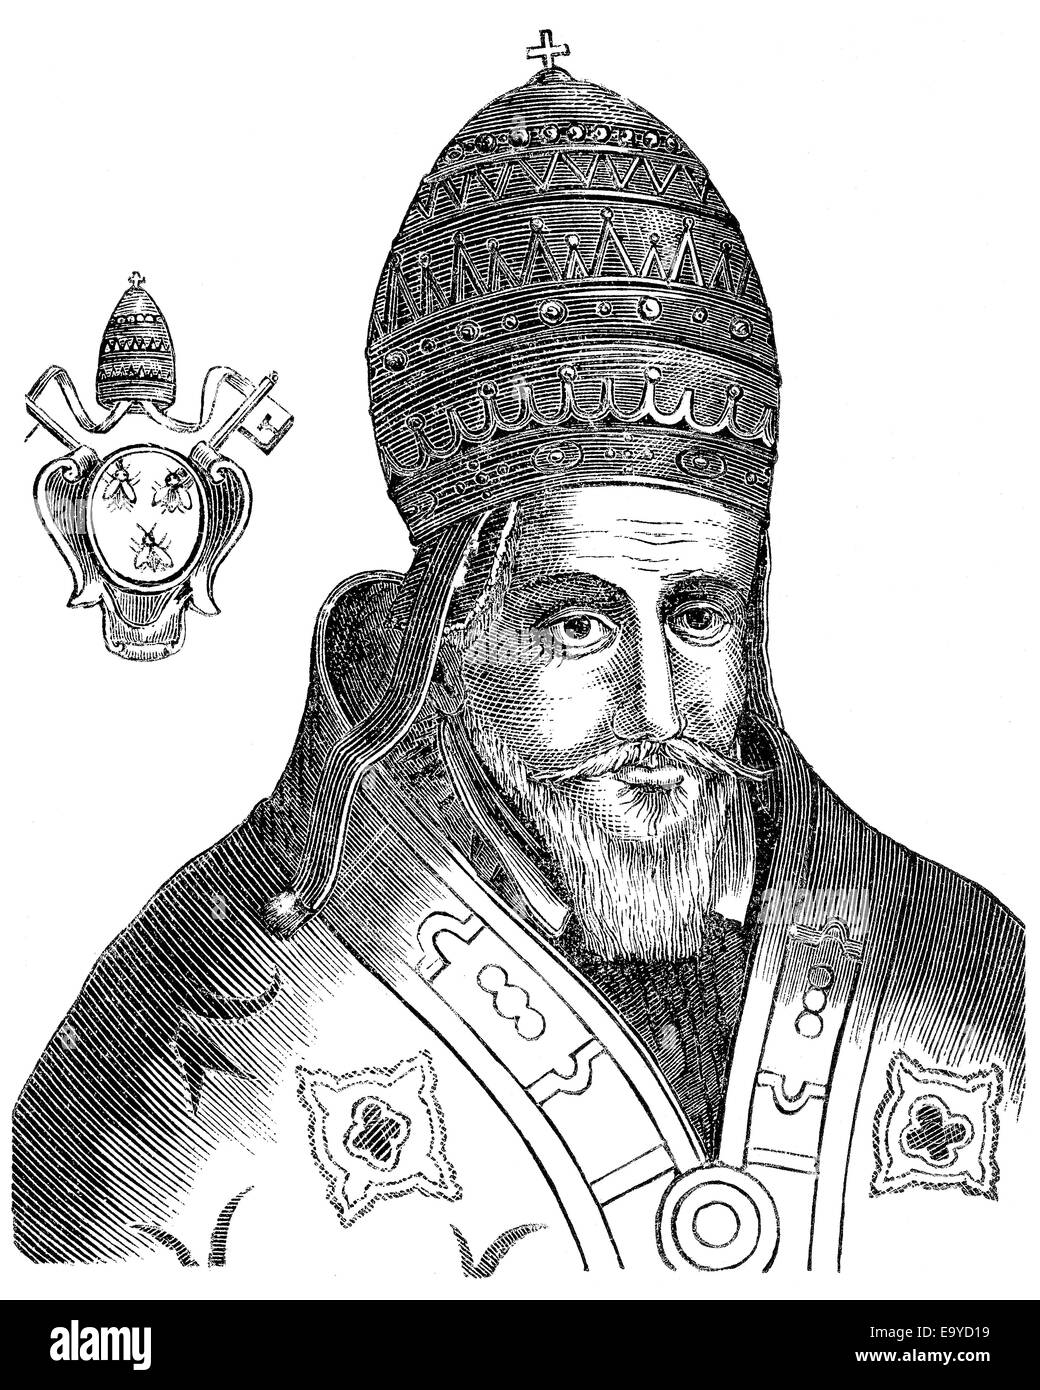 Papa Urbano VIII o Urbanus VIII, nato Maffeo Barberini, 1568-1644, Papa dal 1623 al 1644, Papst Urbano VIII. geboren als Maffeo Foto Stock